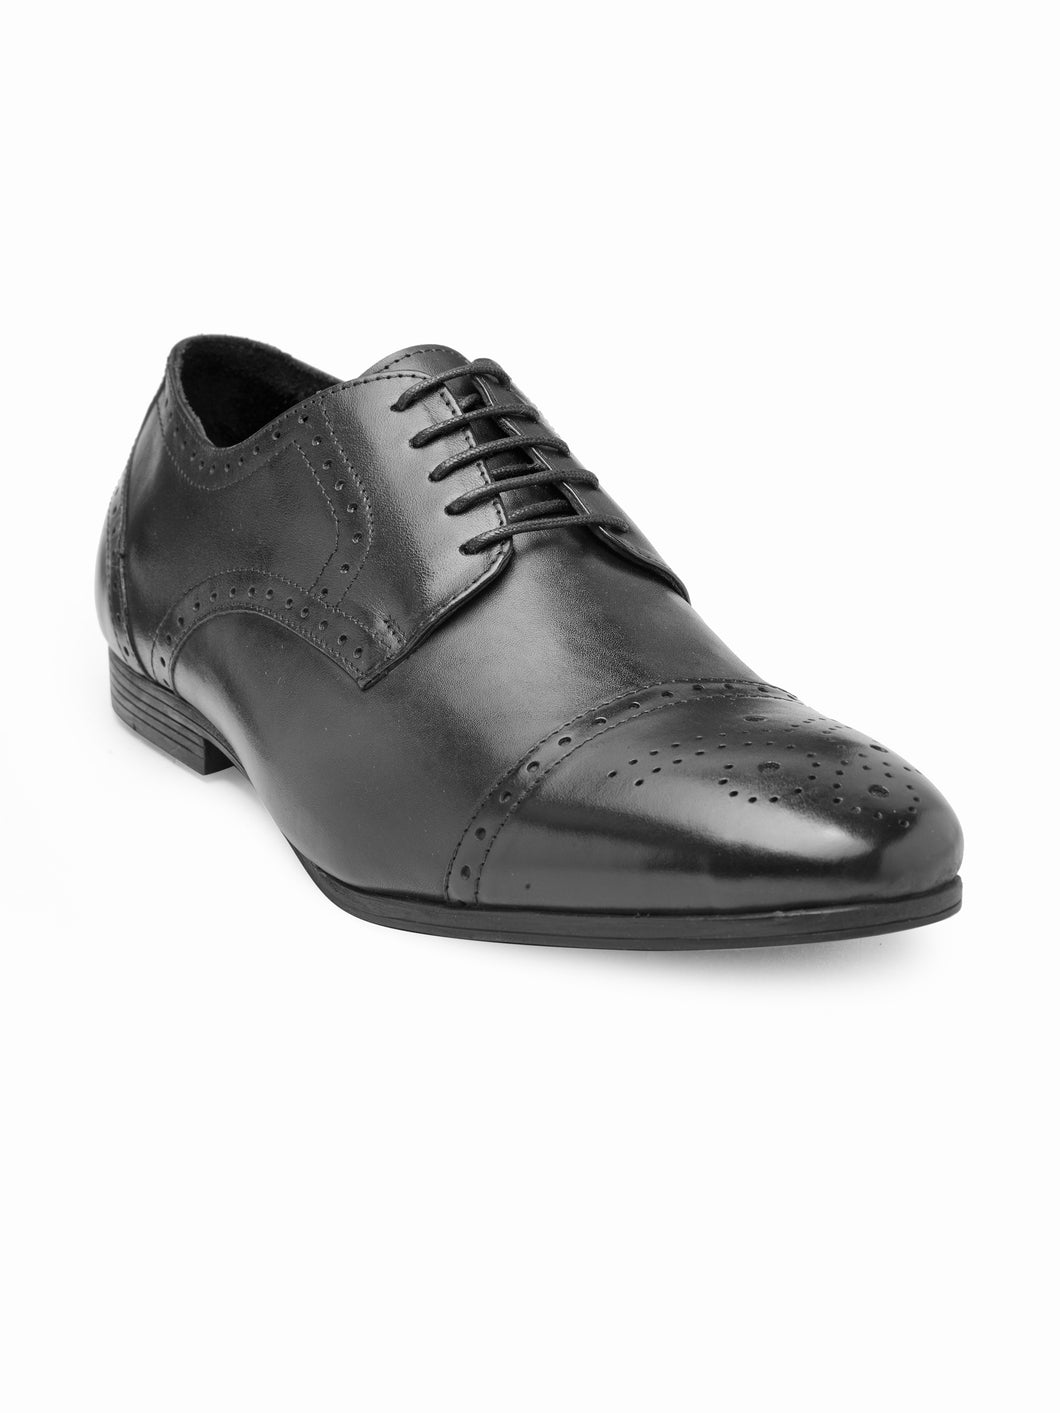 Teakwood Genuine Leathers Men Black  Formal Derby's Shoes